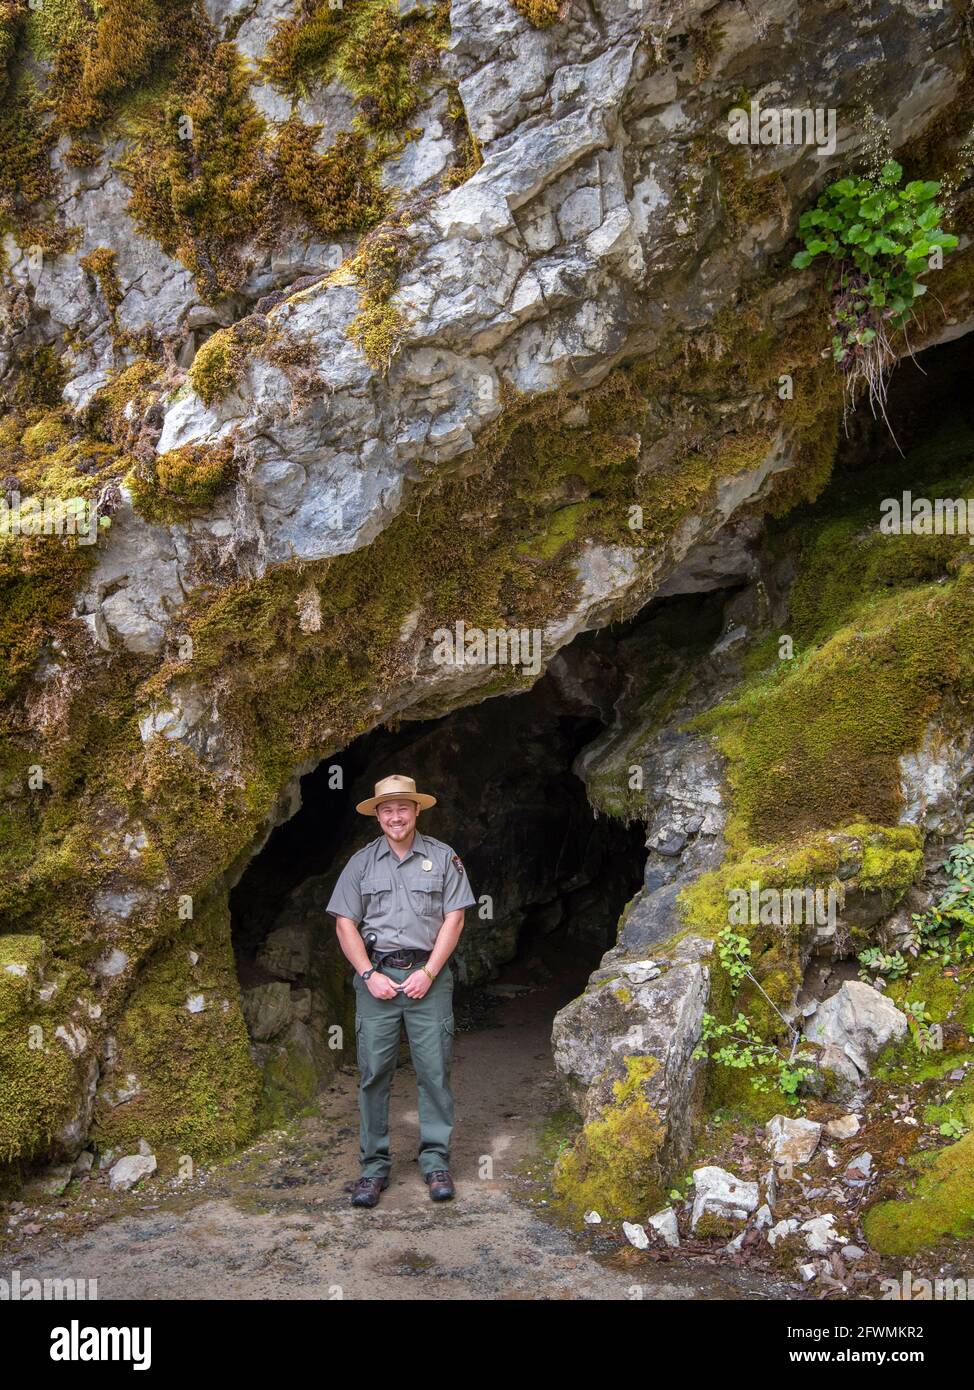 National Parks Ranger Alex Stillson at a cave entrance in Oregon Caves National Monument, Oregon. Stock Photo